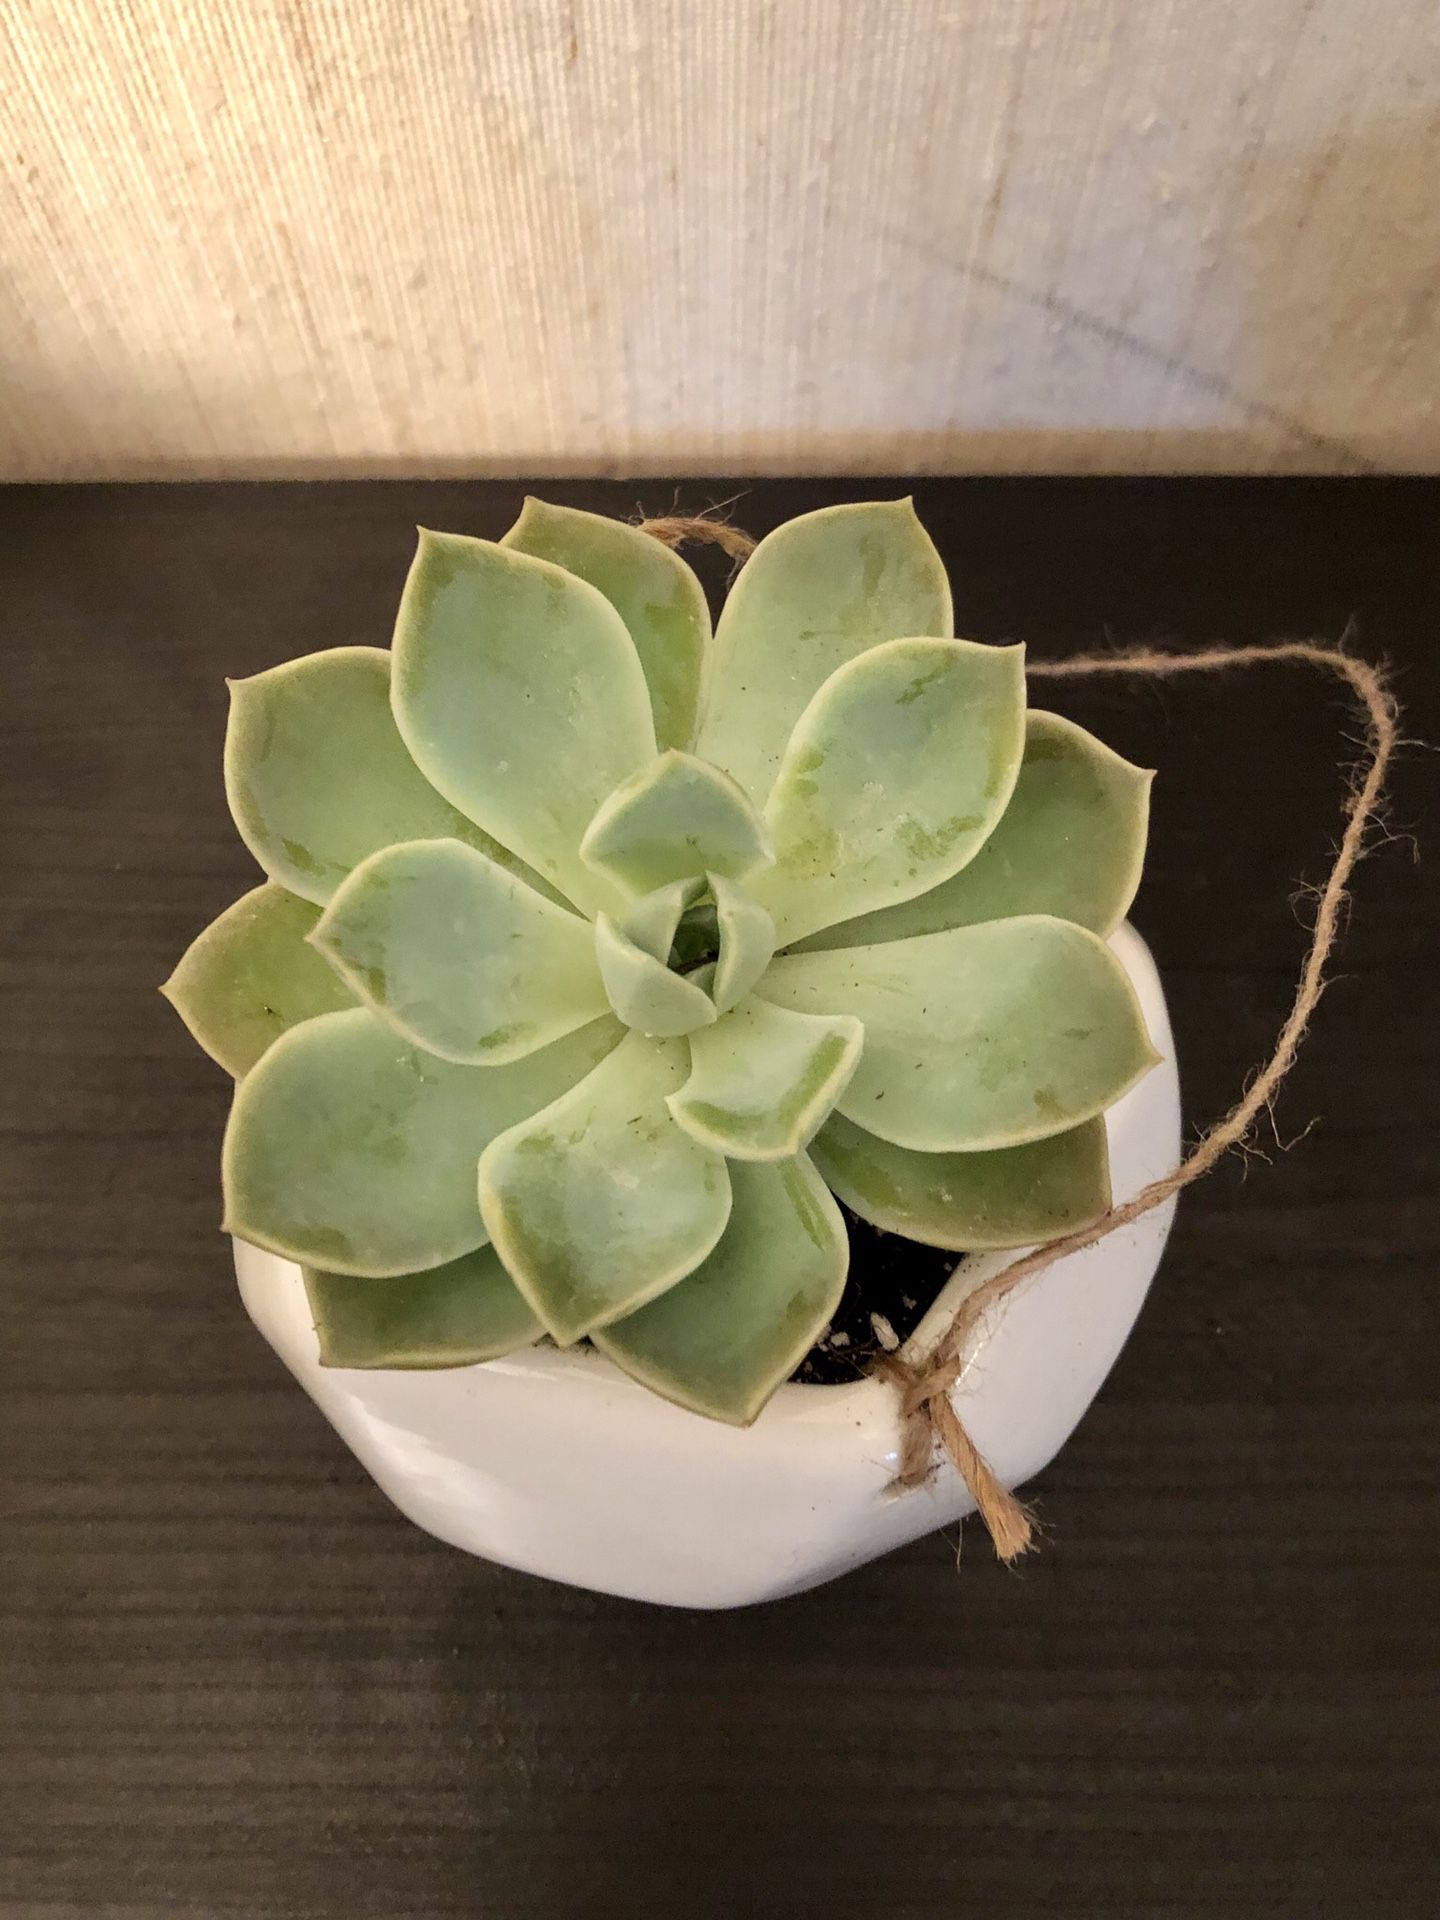 Live succulent plant in a 4" white ceramic pot